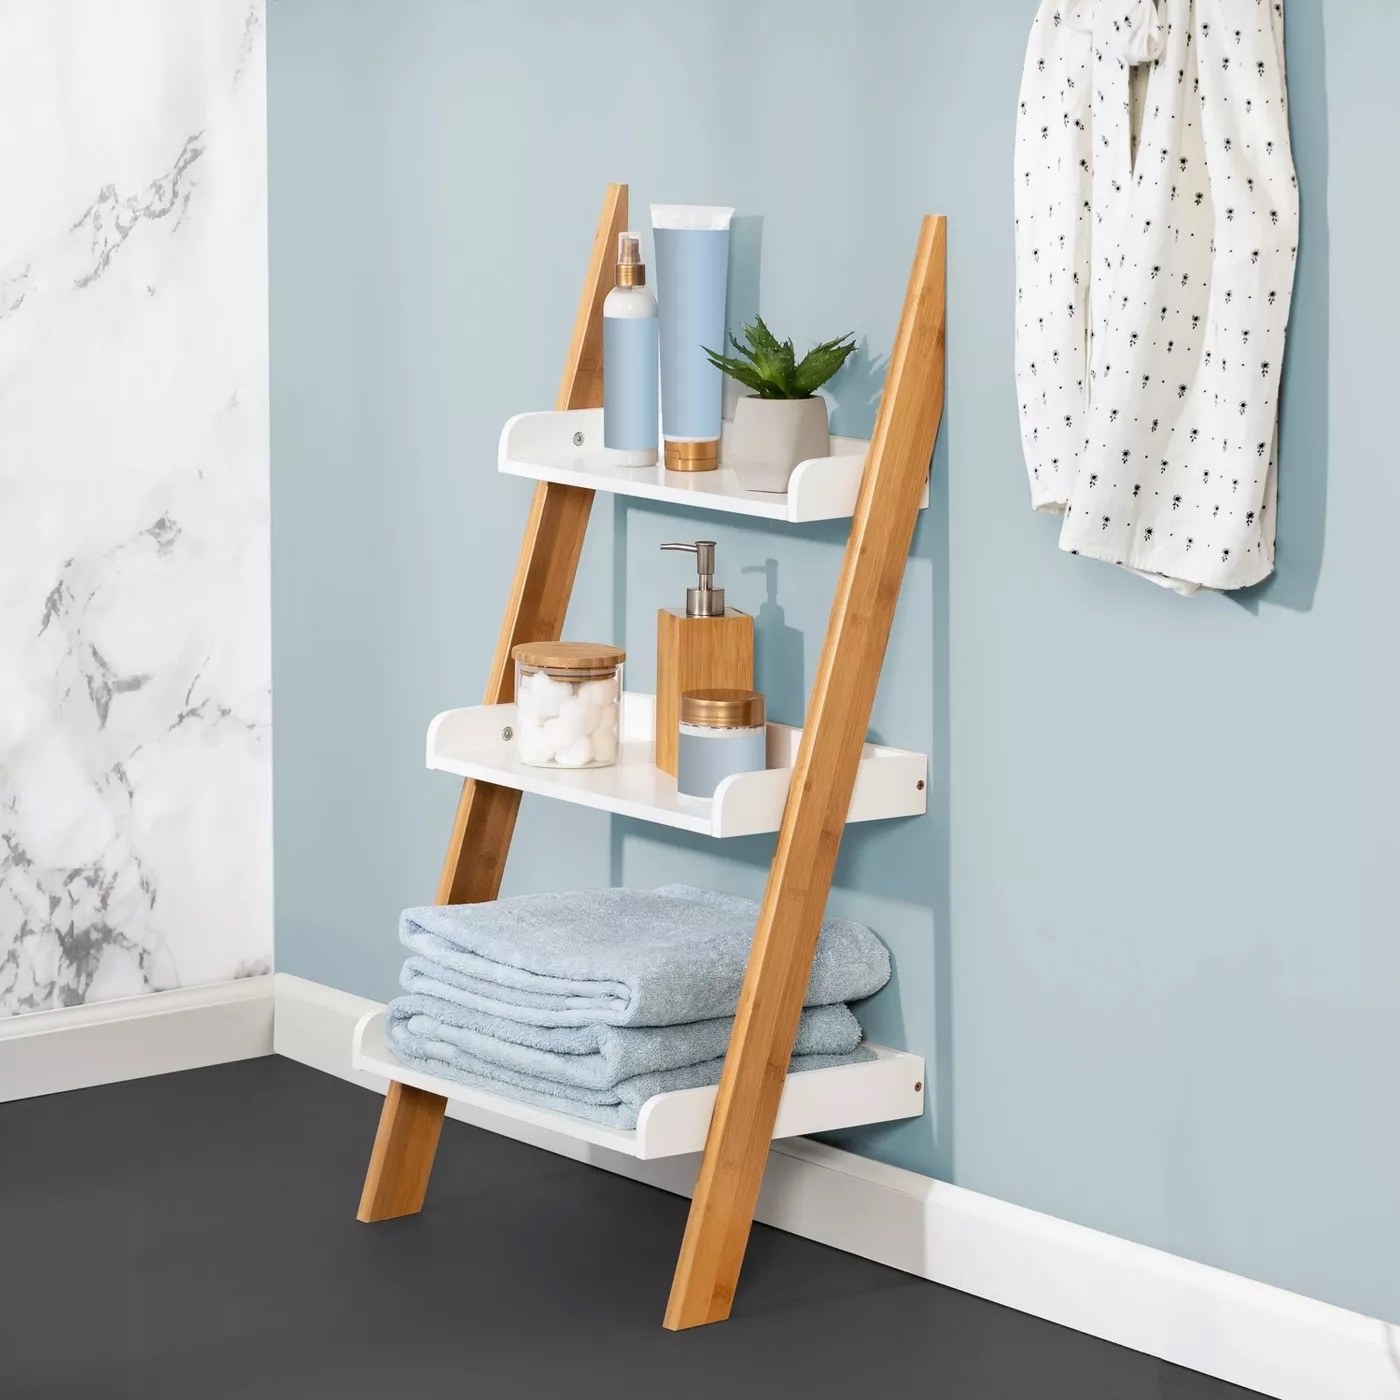 a three-tier ladder shelf